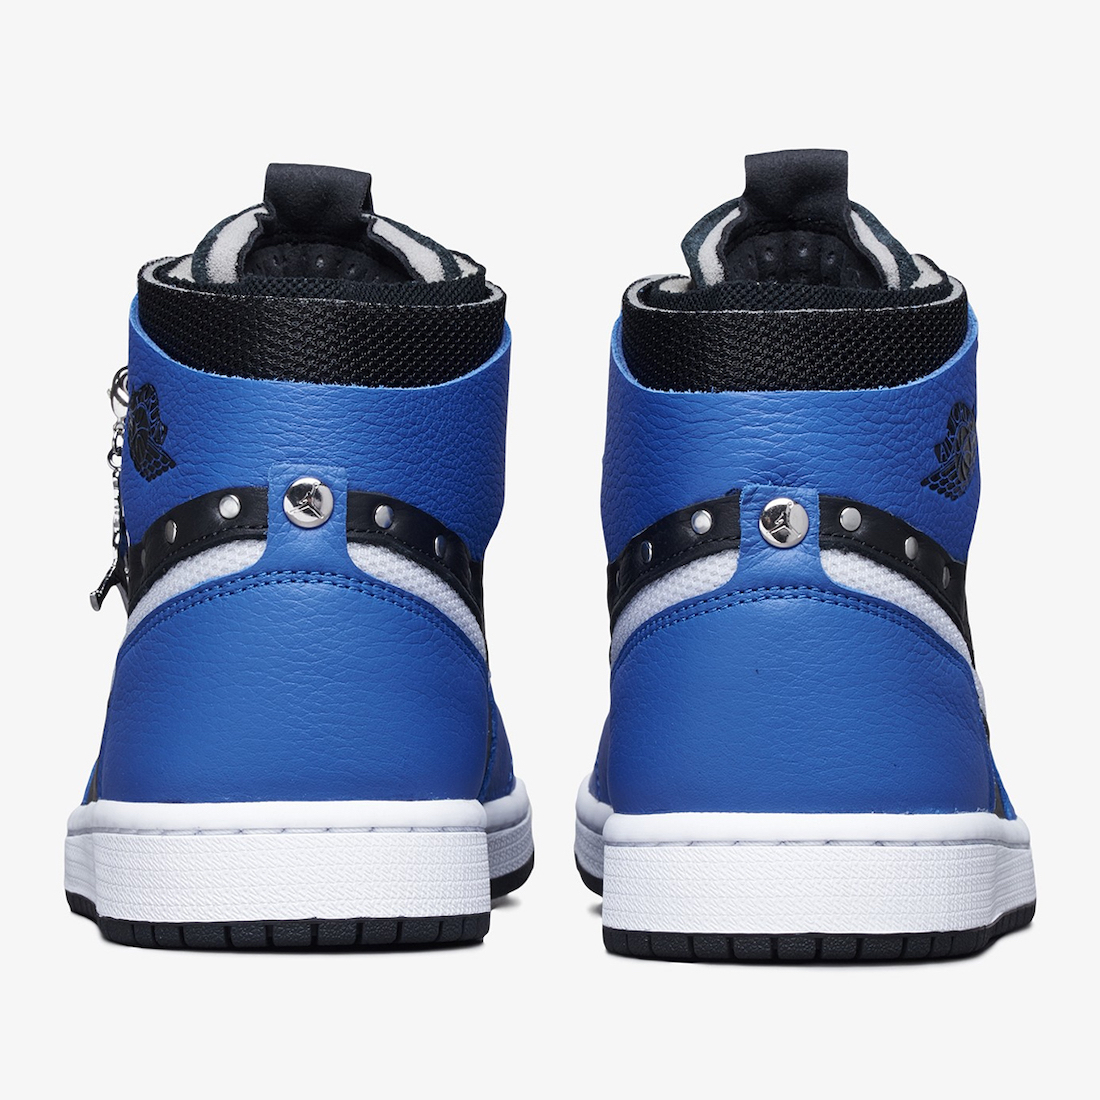 Nike Jordan 6 Rings White Dark Marina Blue Sneake Zoom Comfort Hyper Royal CZ1360-401 Release Date